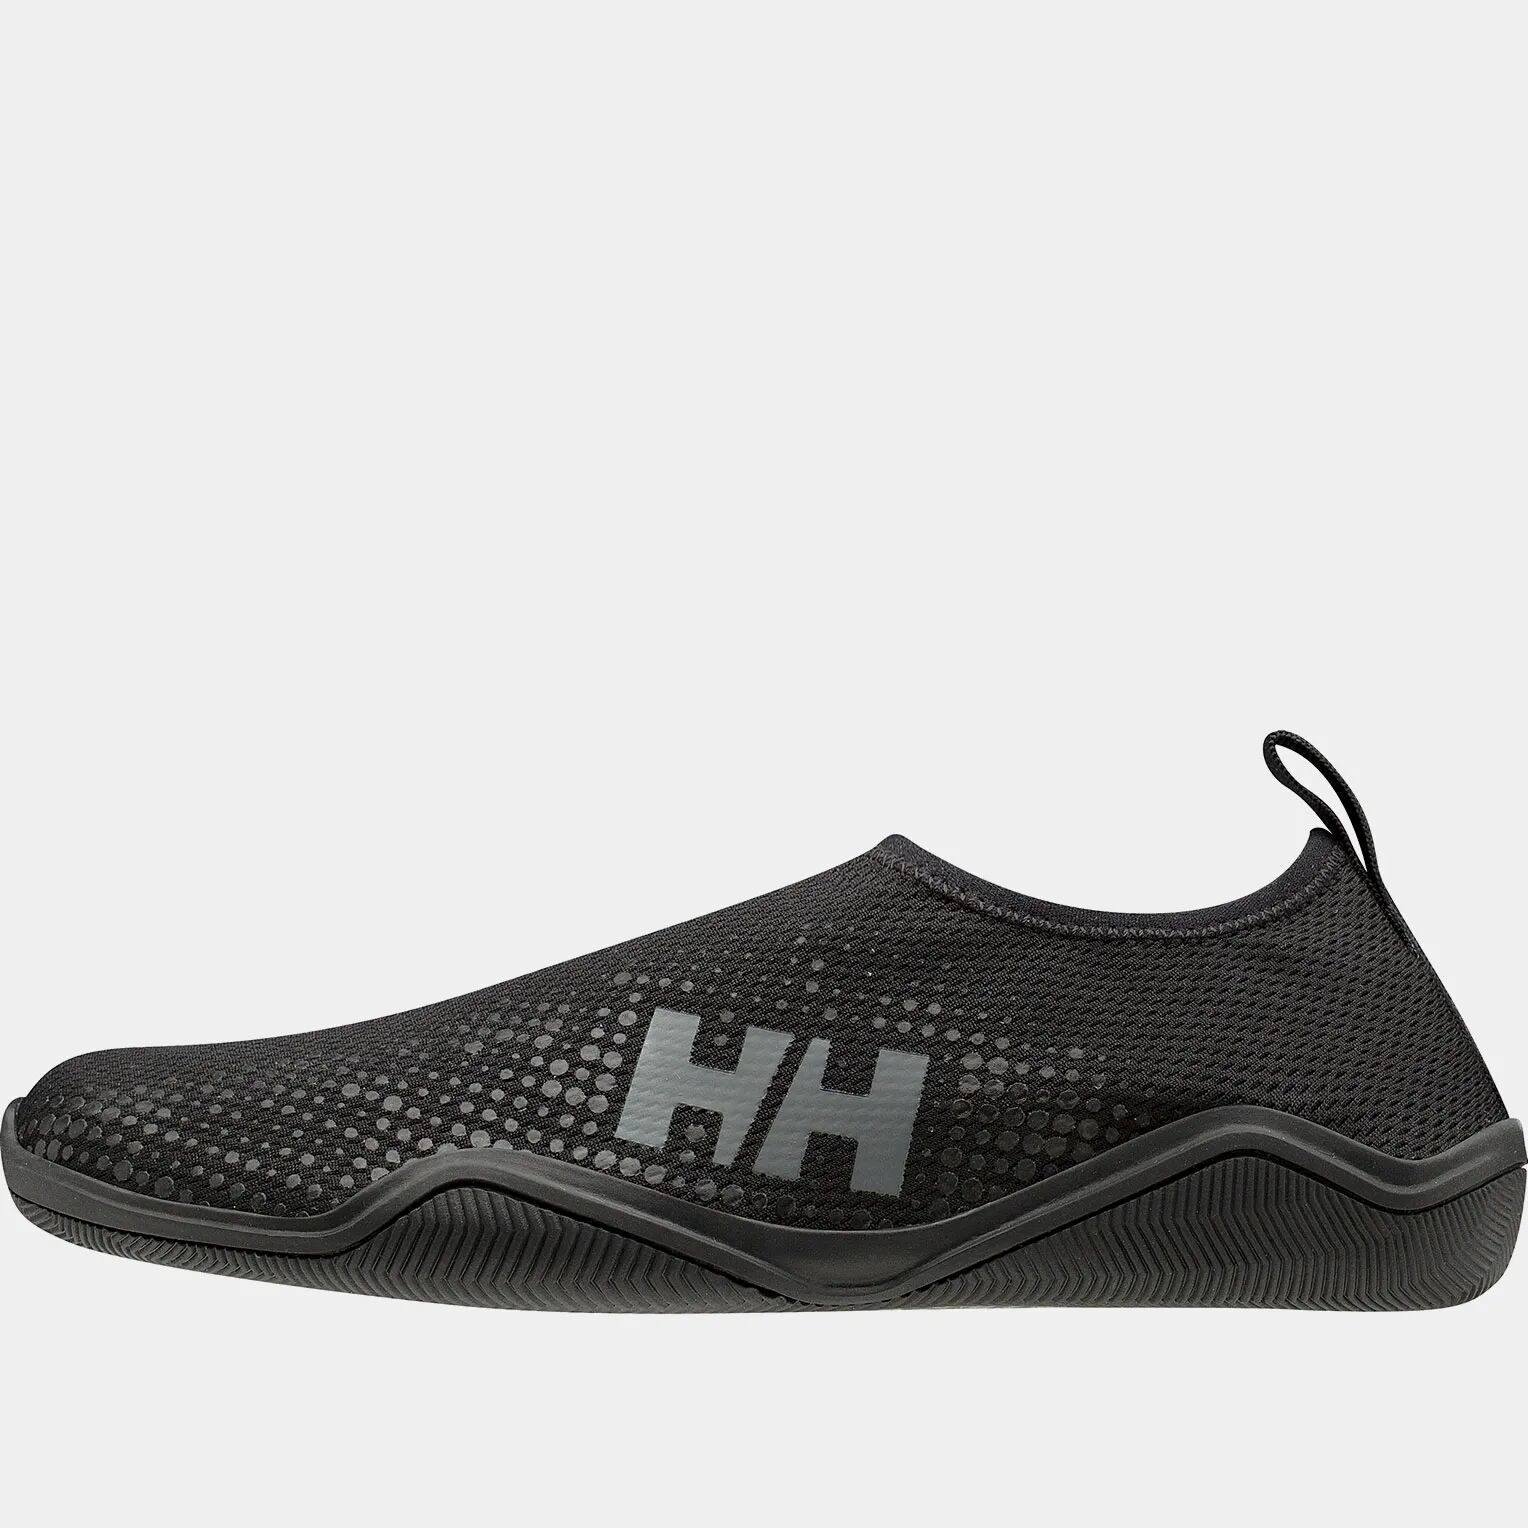 Helly Hansen Women's Crest Watermocs Water Shoes Black 8.5